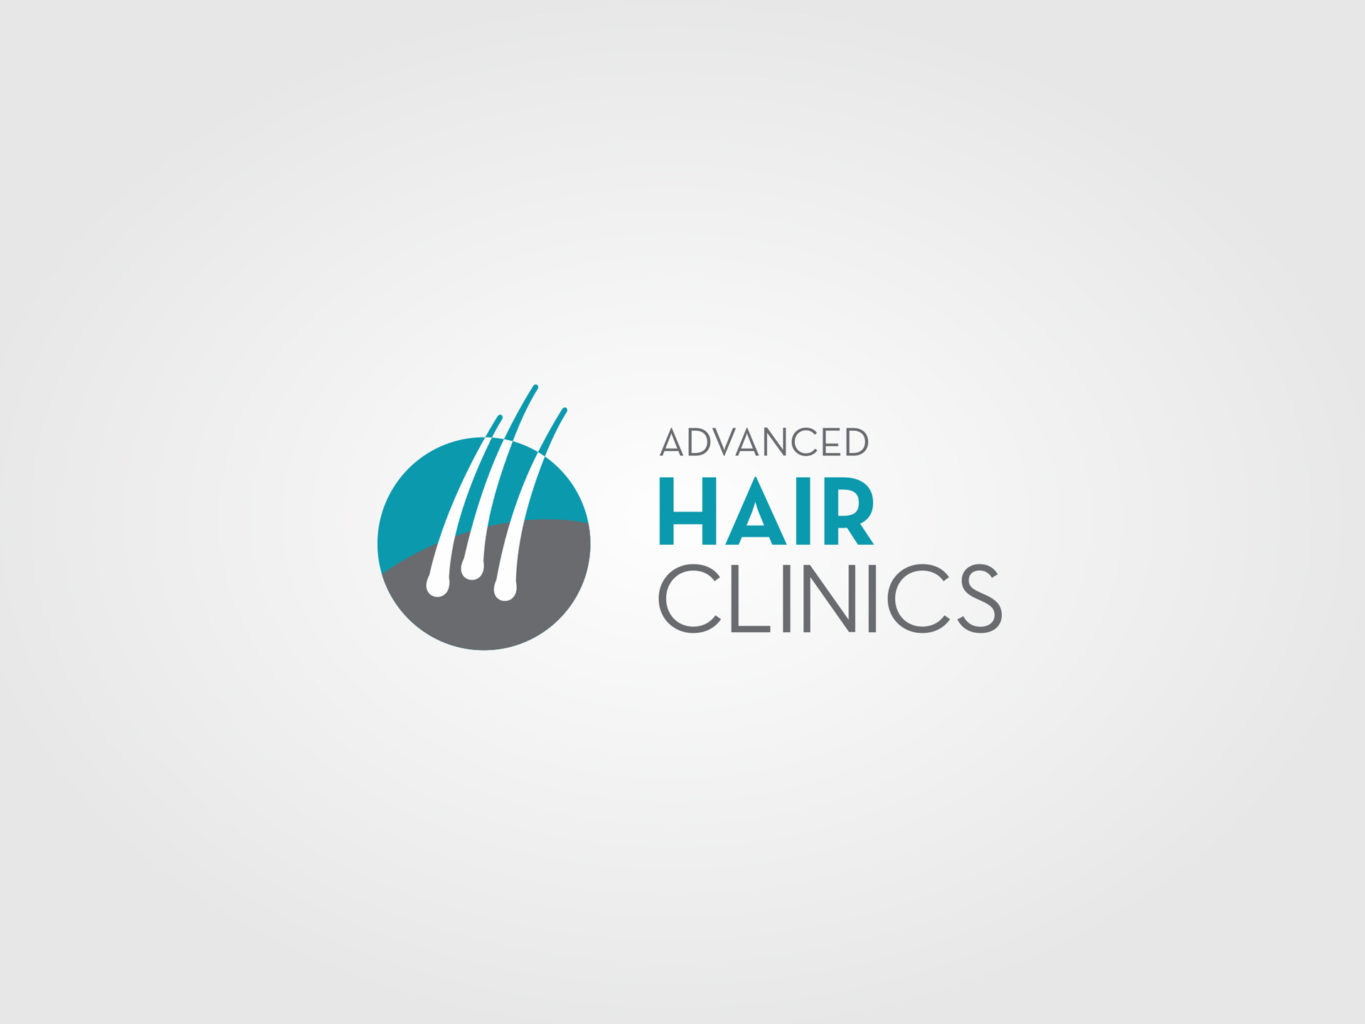 Advanced Hair Clinics logo by fiftyeggz